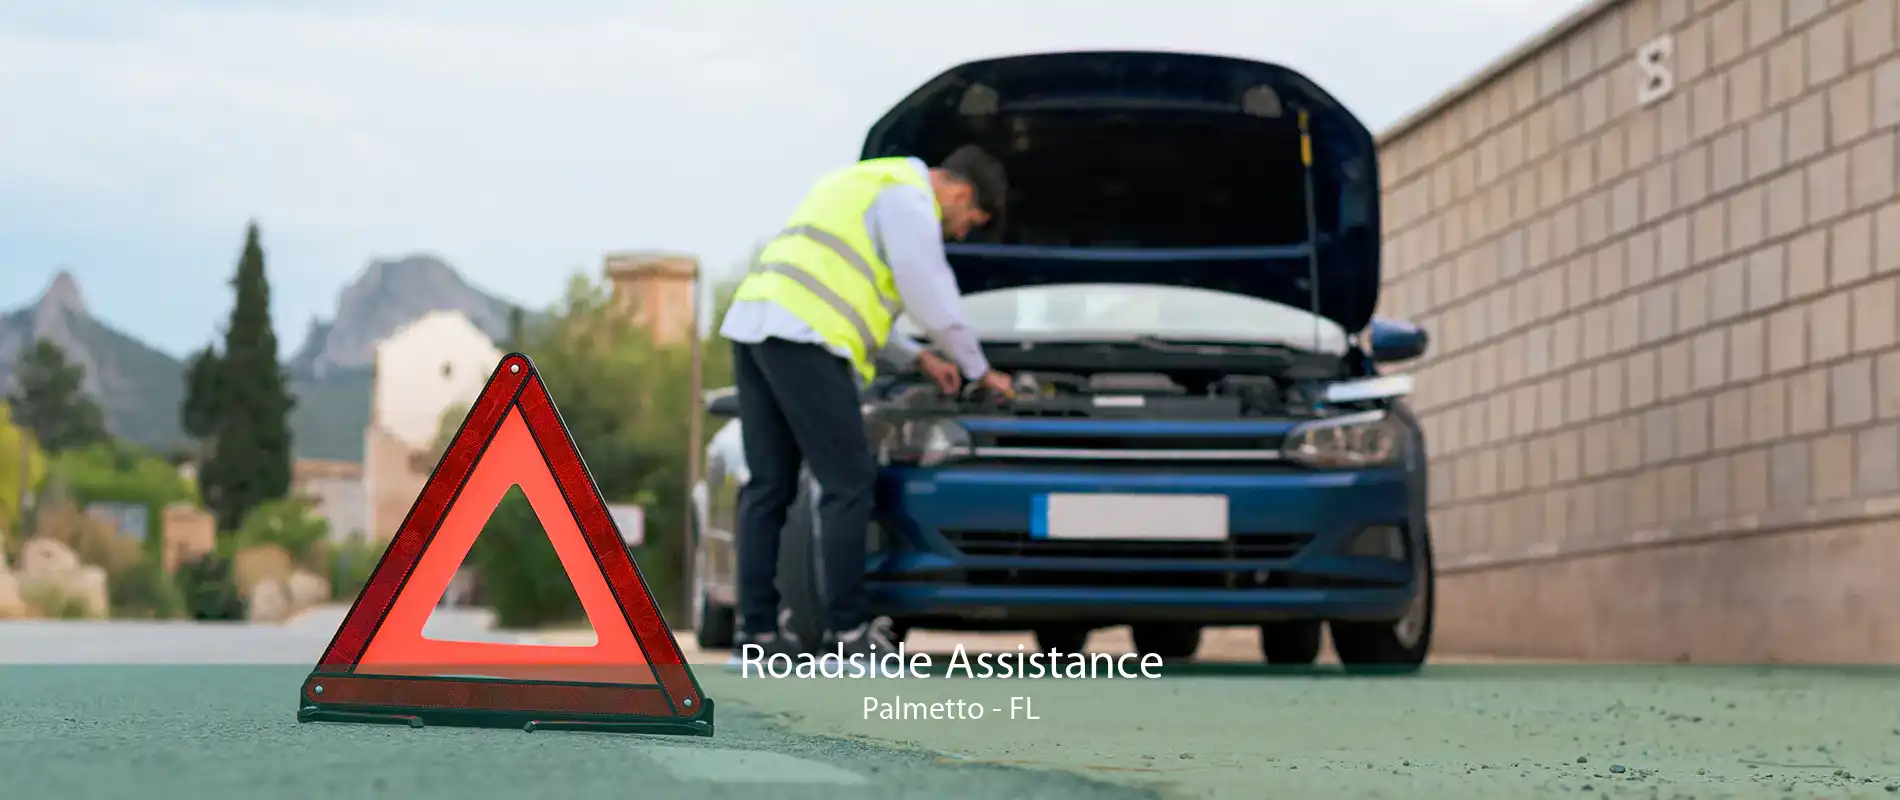 Roadside Assistance Palmetto - FL